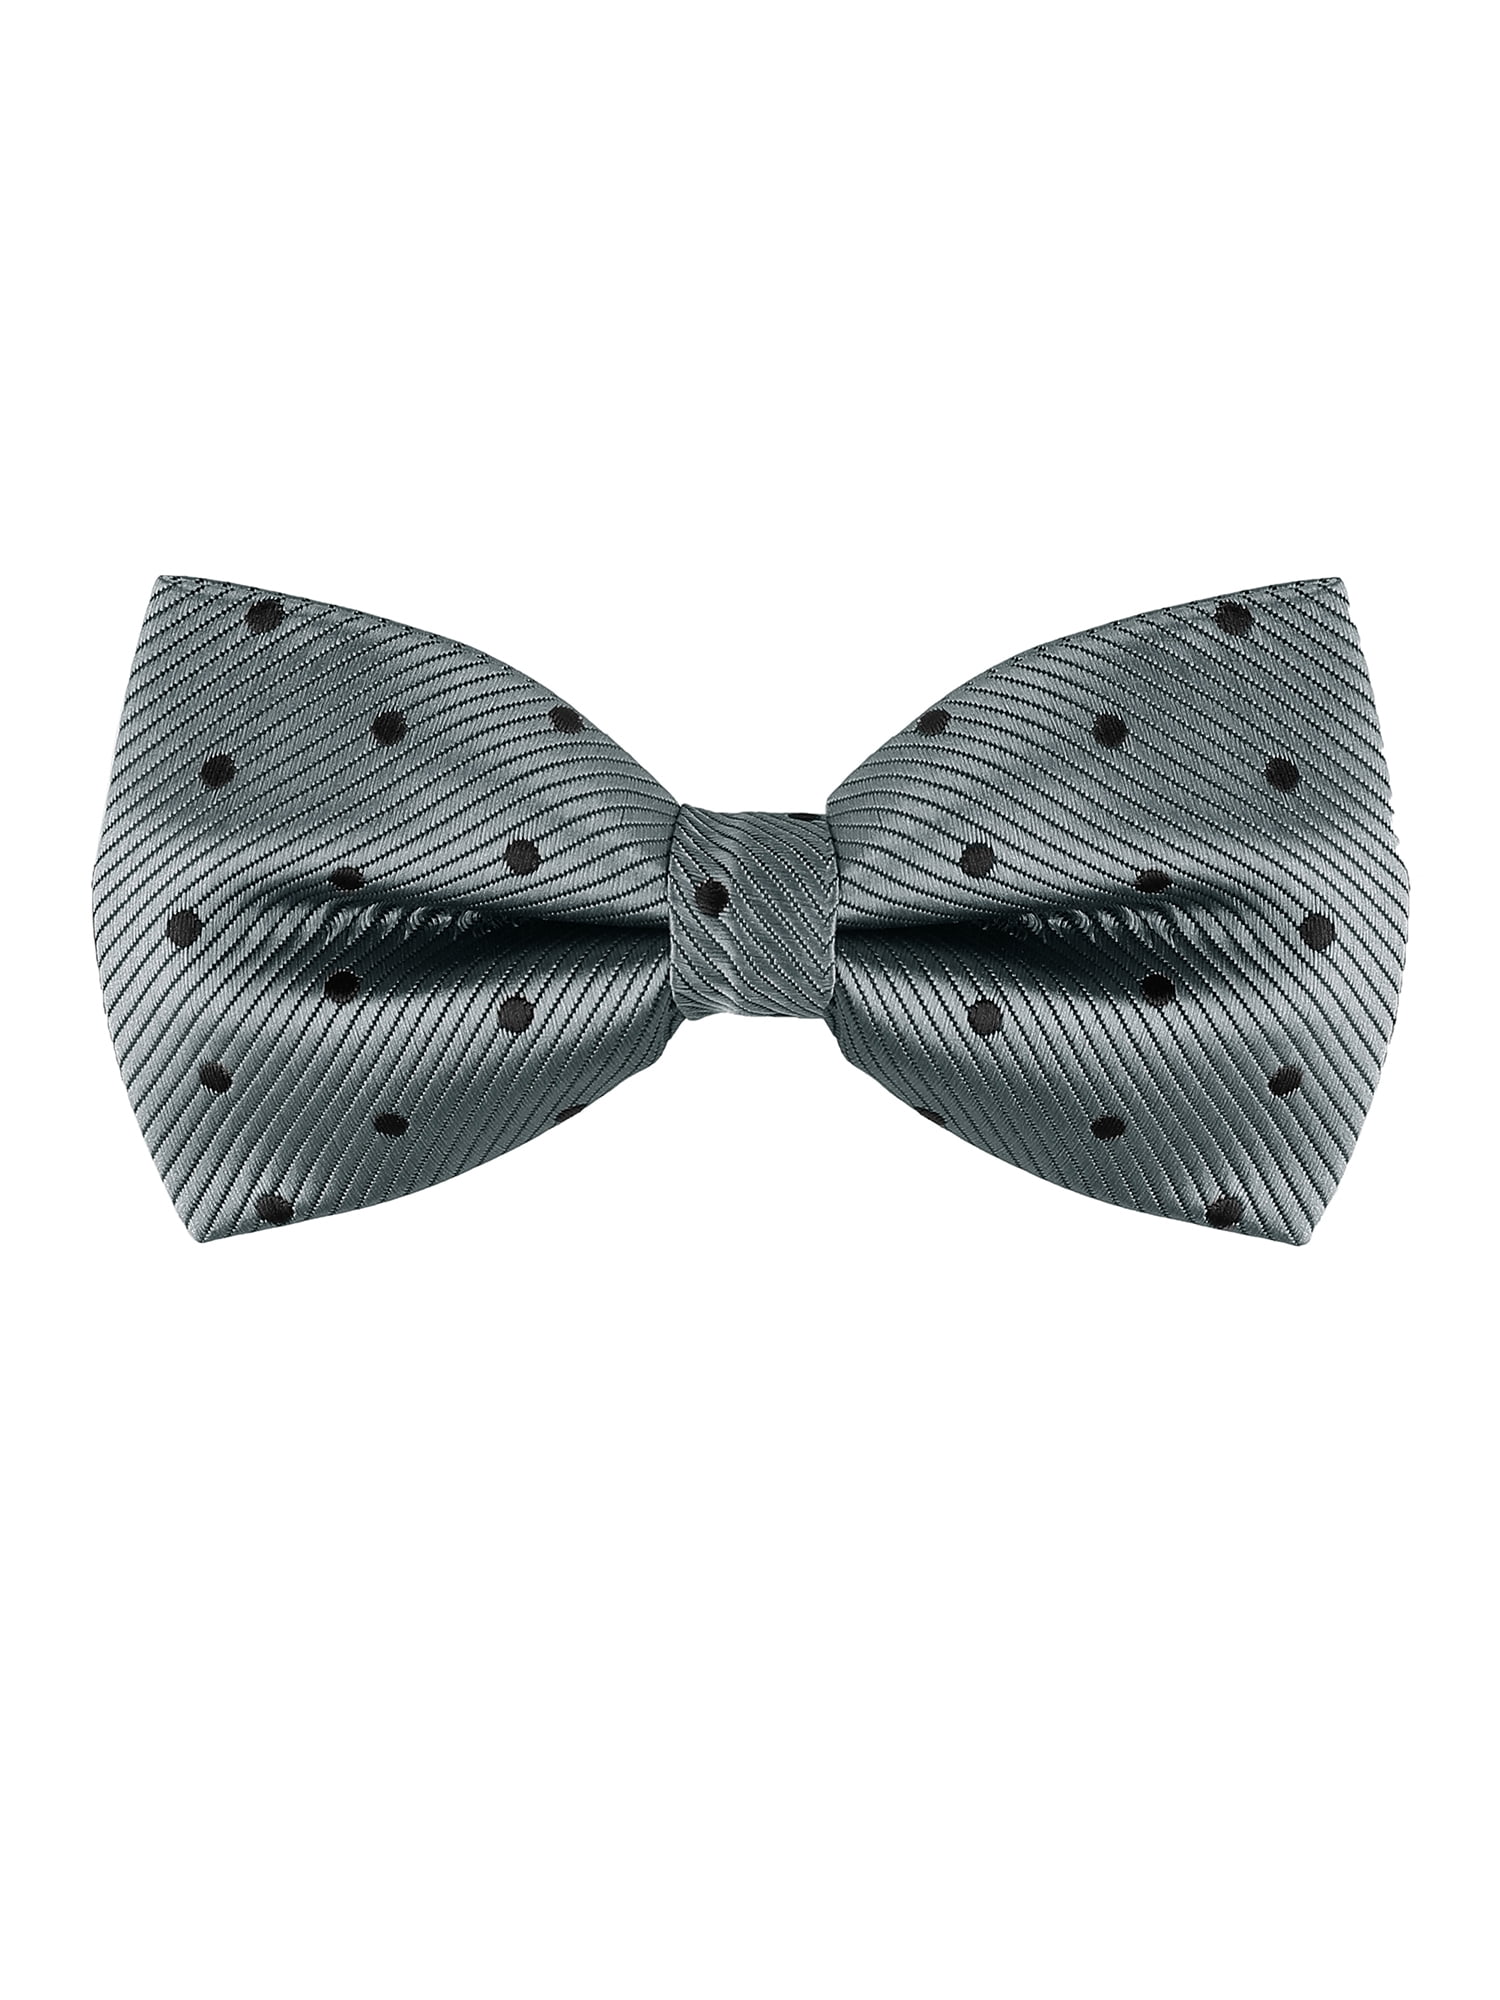 Classic Tuxedo Bowtie Men's Adjustable Wedding Bow Tie Polka Dot Grid Pattern